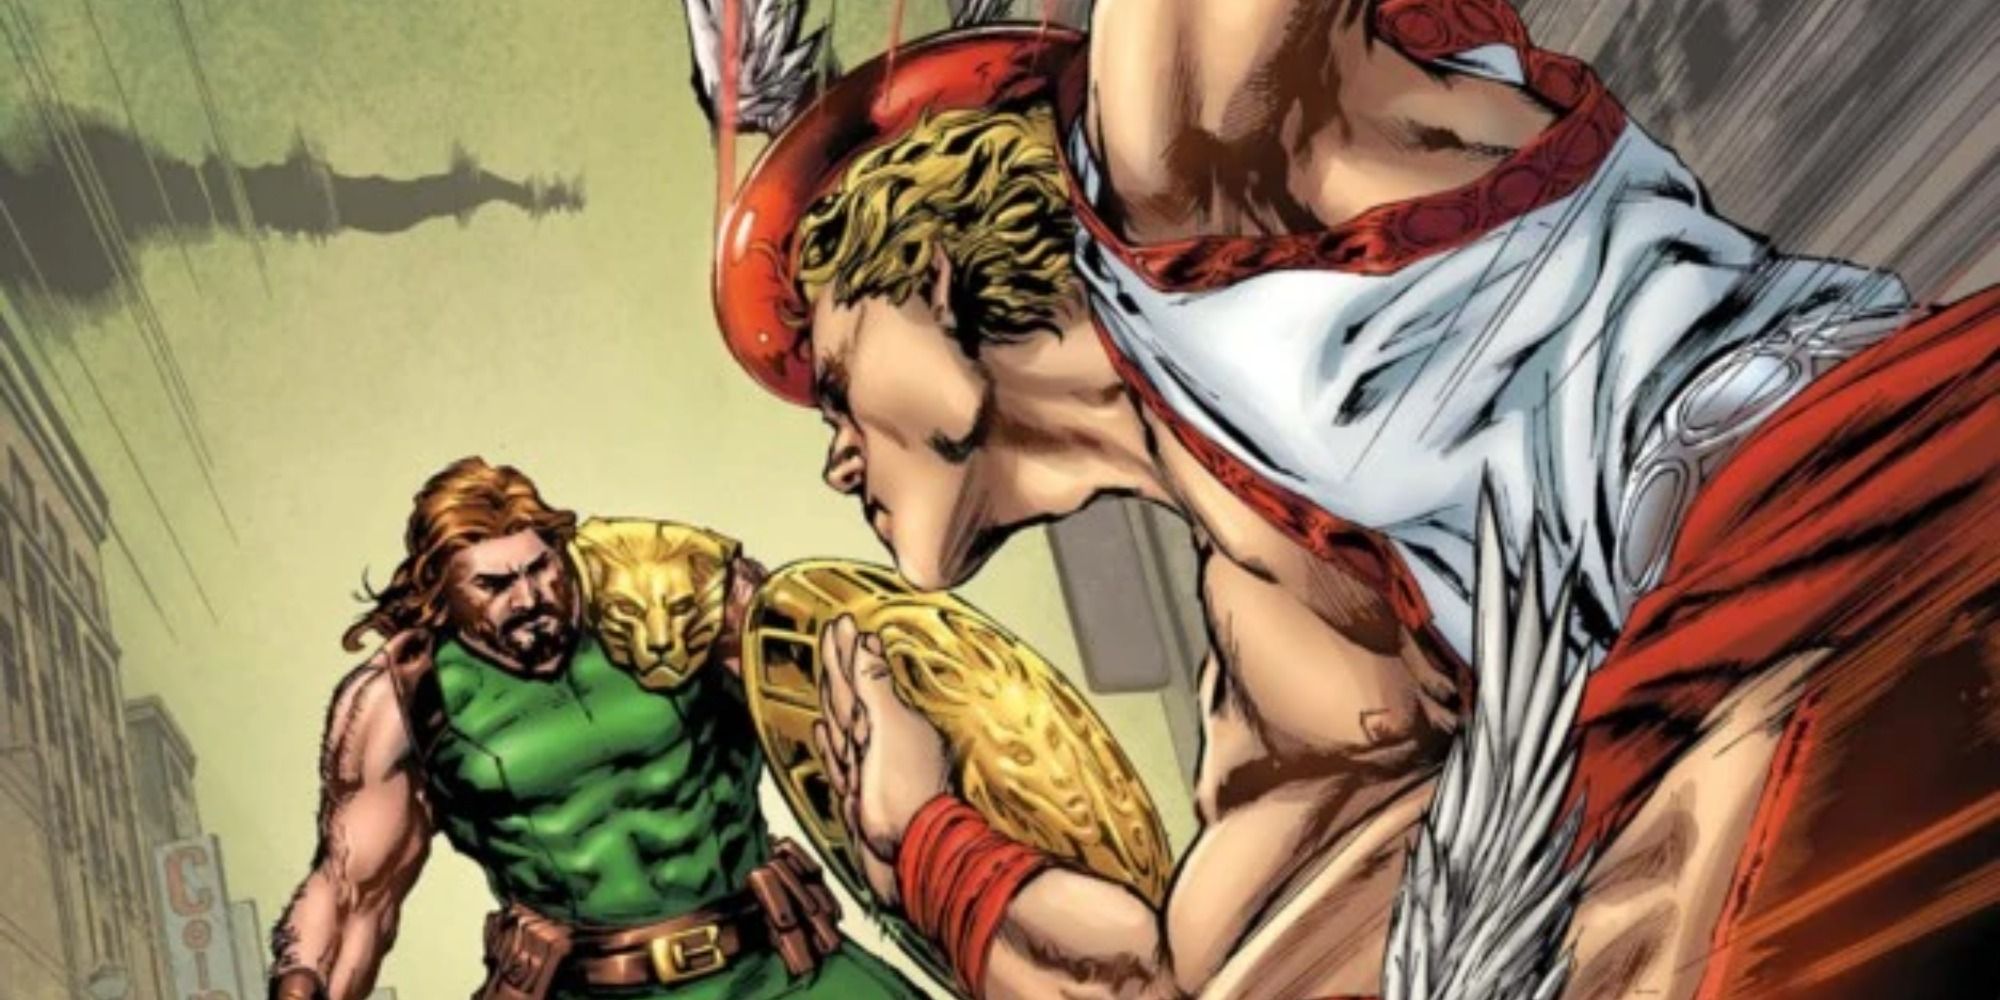 Hermes races into battle in Marvel Comics.